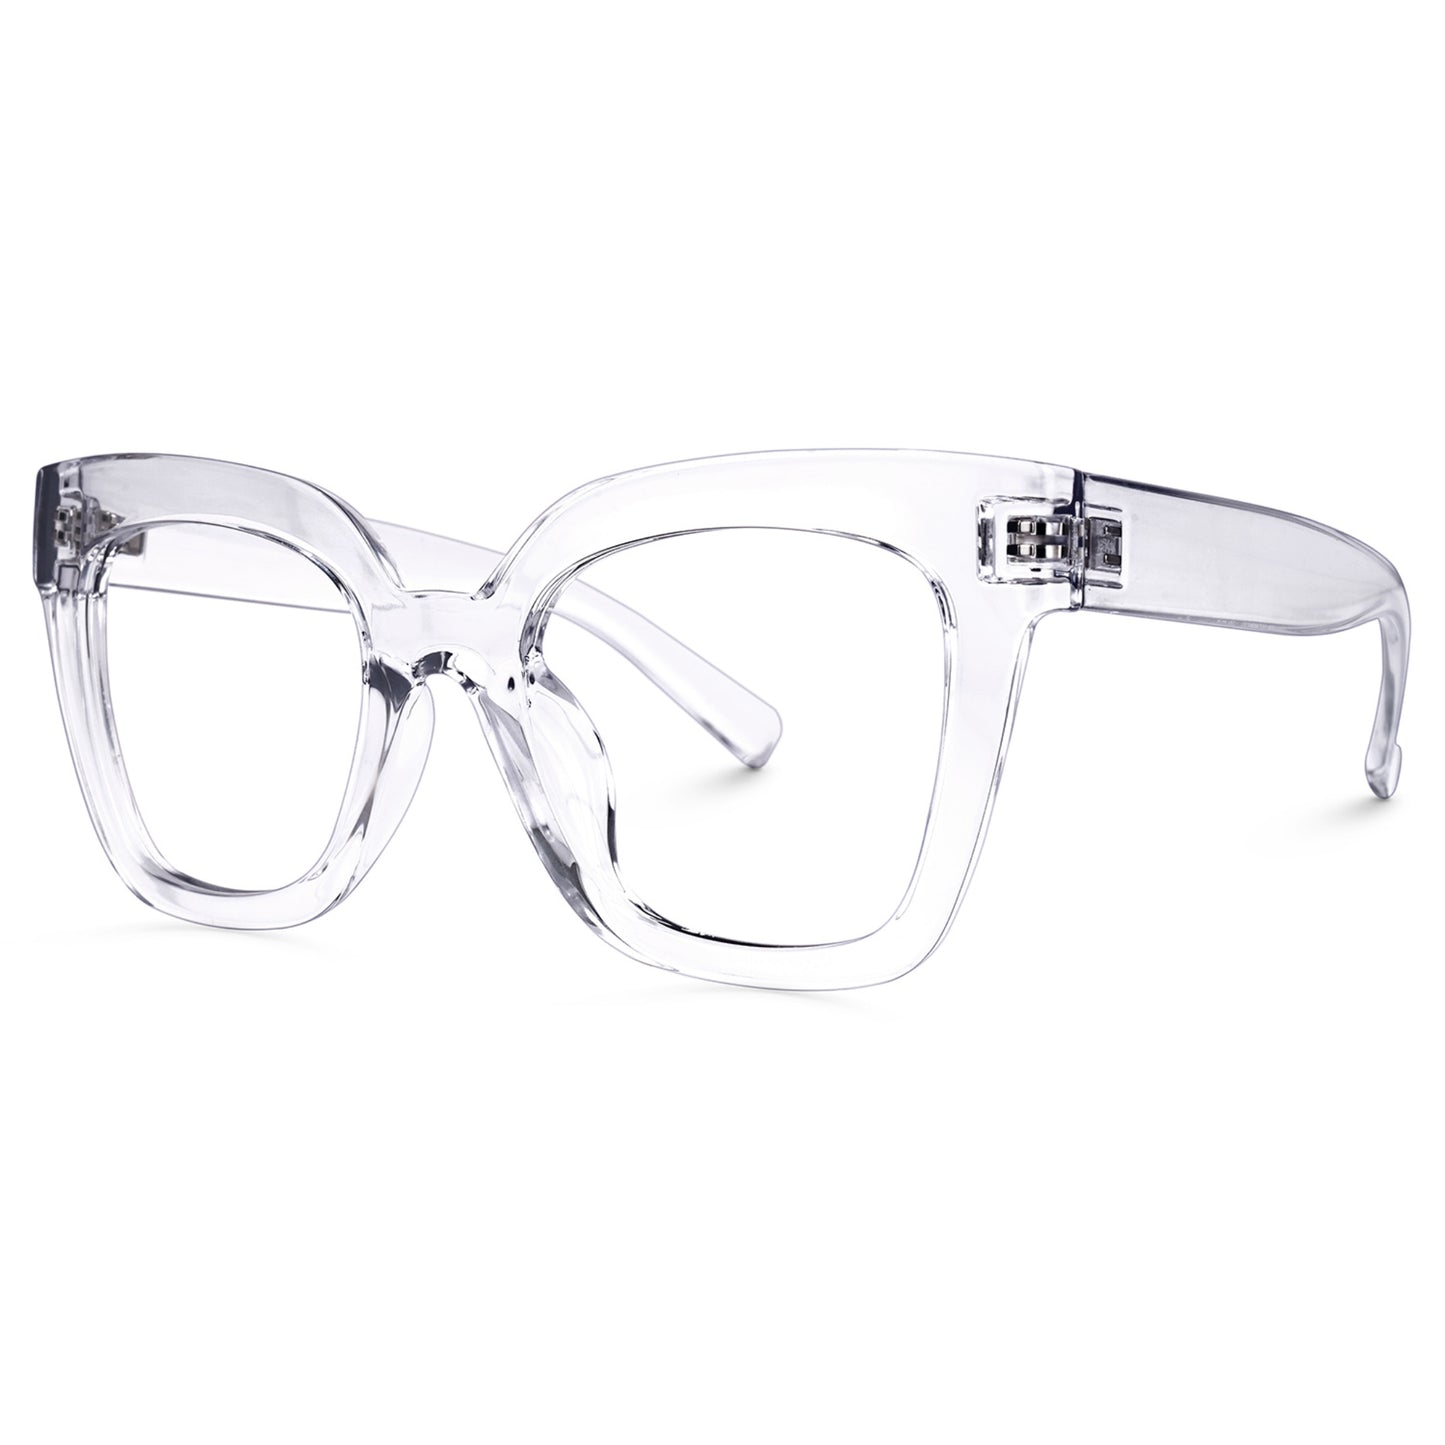 Sabrina - Blue Light Glasses Optin Store